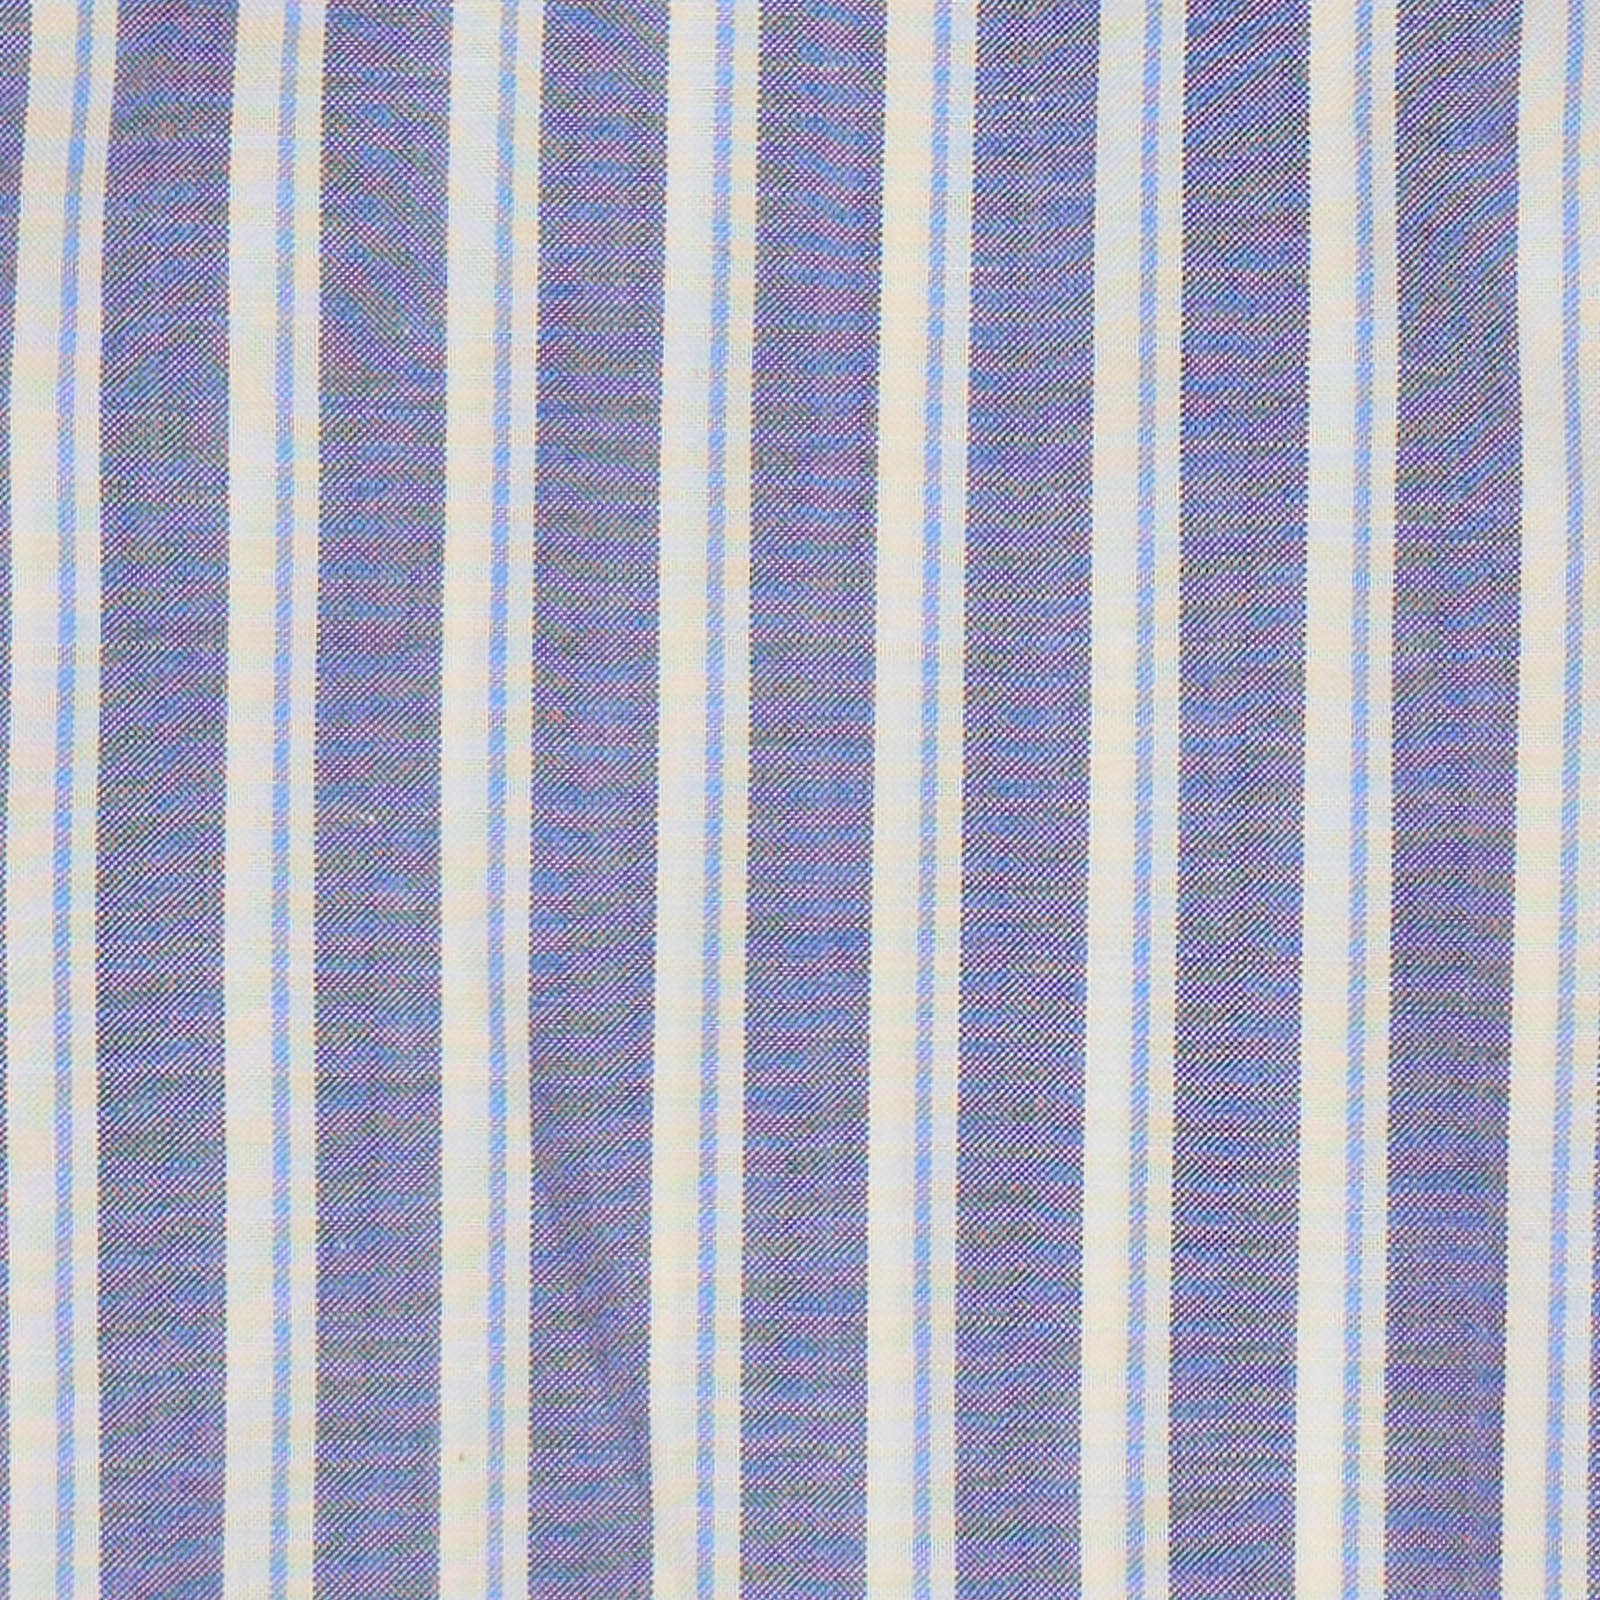 KITON Napoli Handmade Blue Striped Cotton French Cuff Dress Shirt EU 44 NEW US 17.5